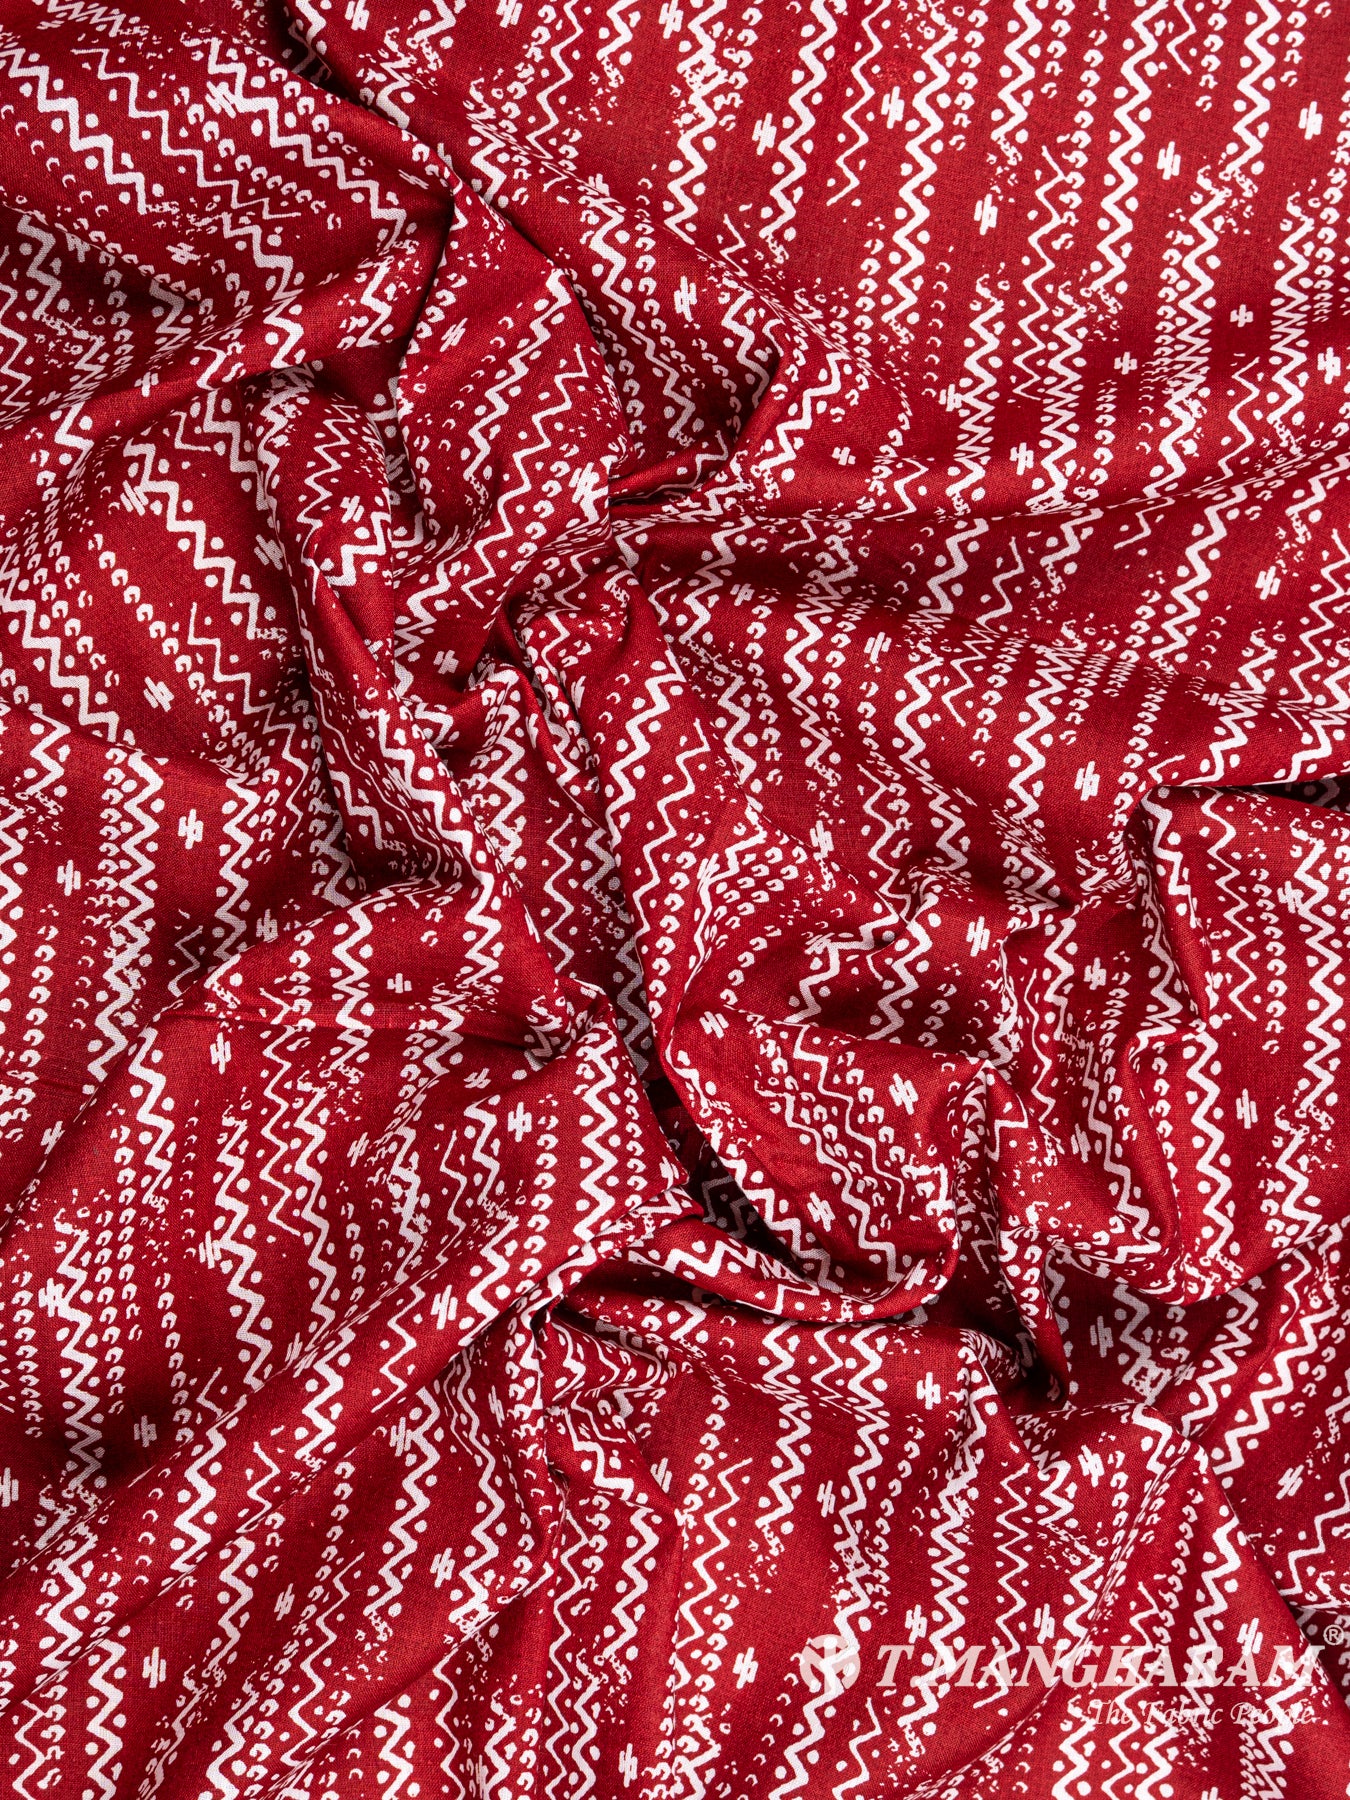 Maroon Cotton Fabric - EC6145 view-4